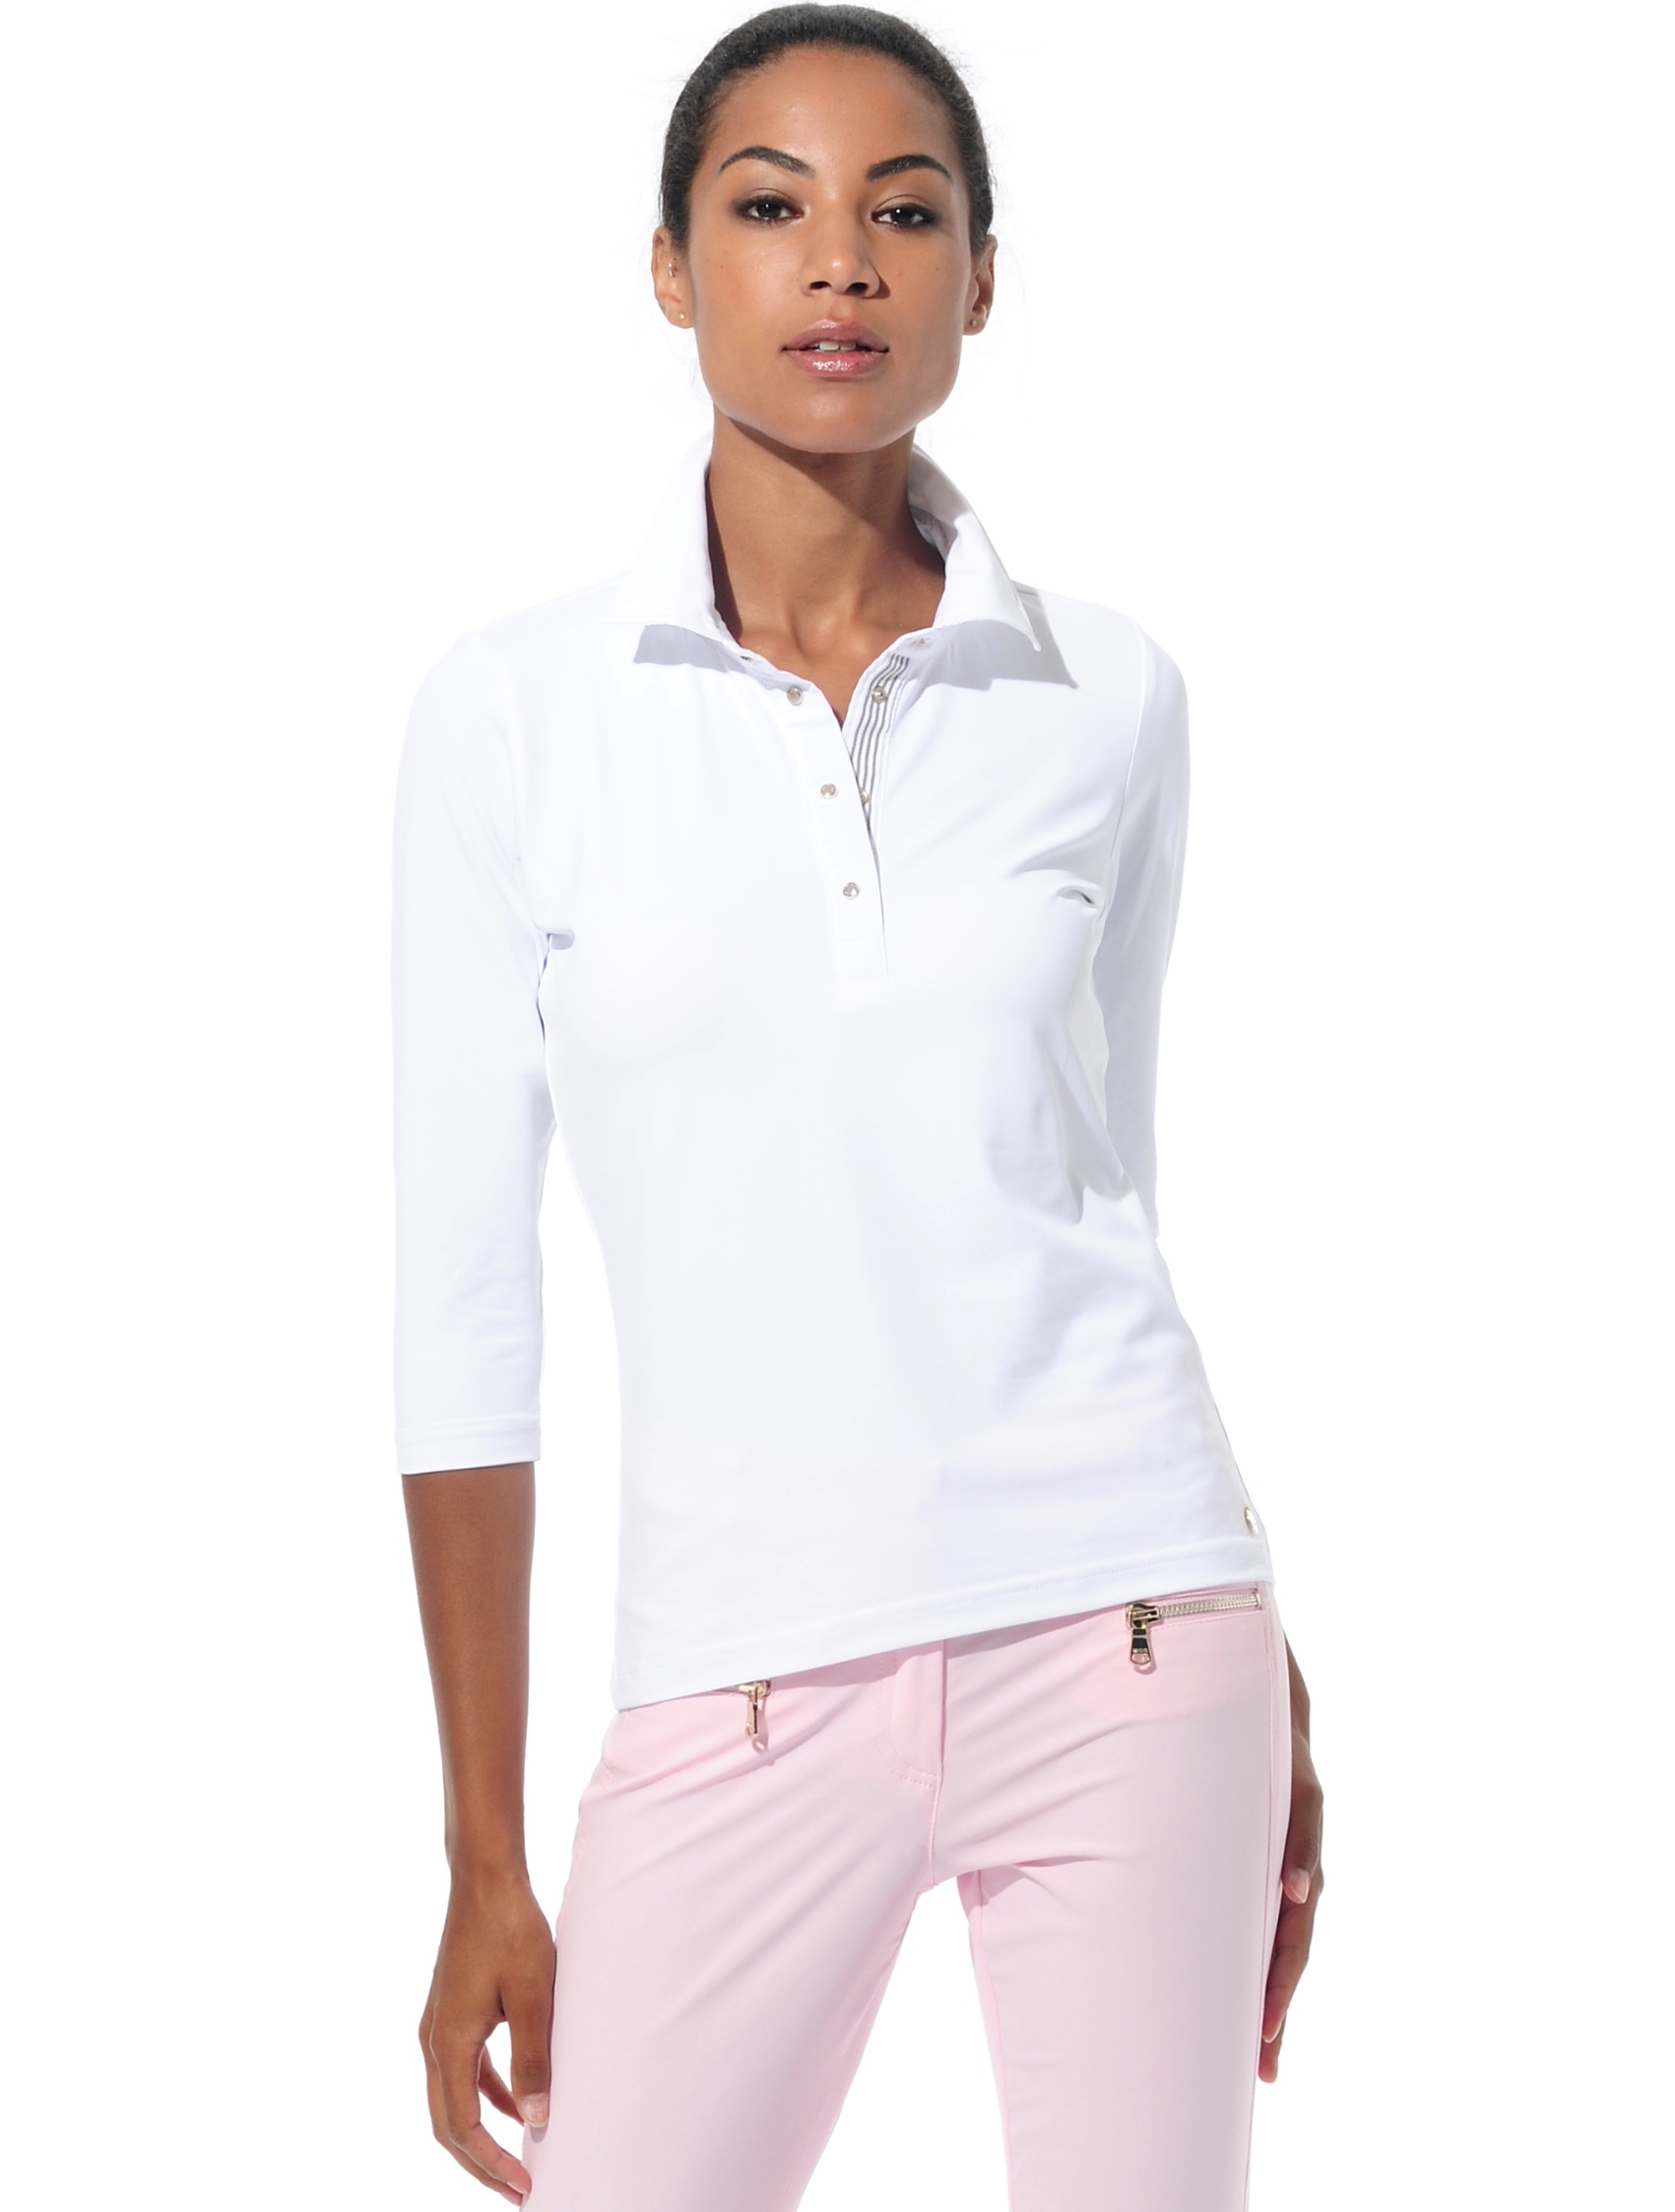 Jersey golf polo shirt white 